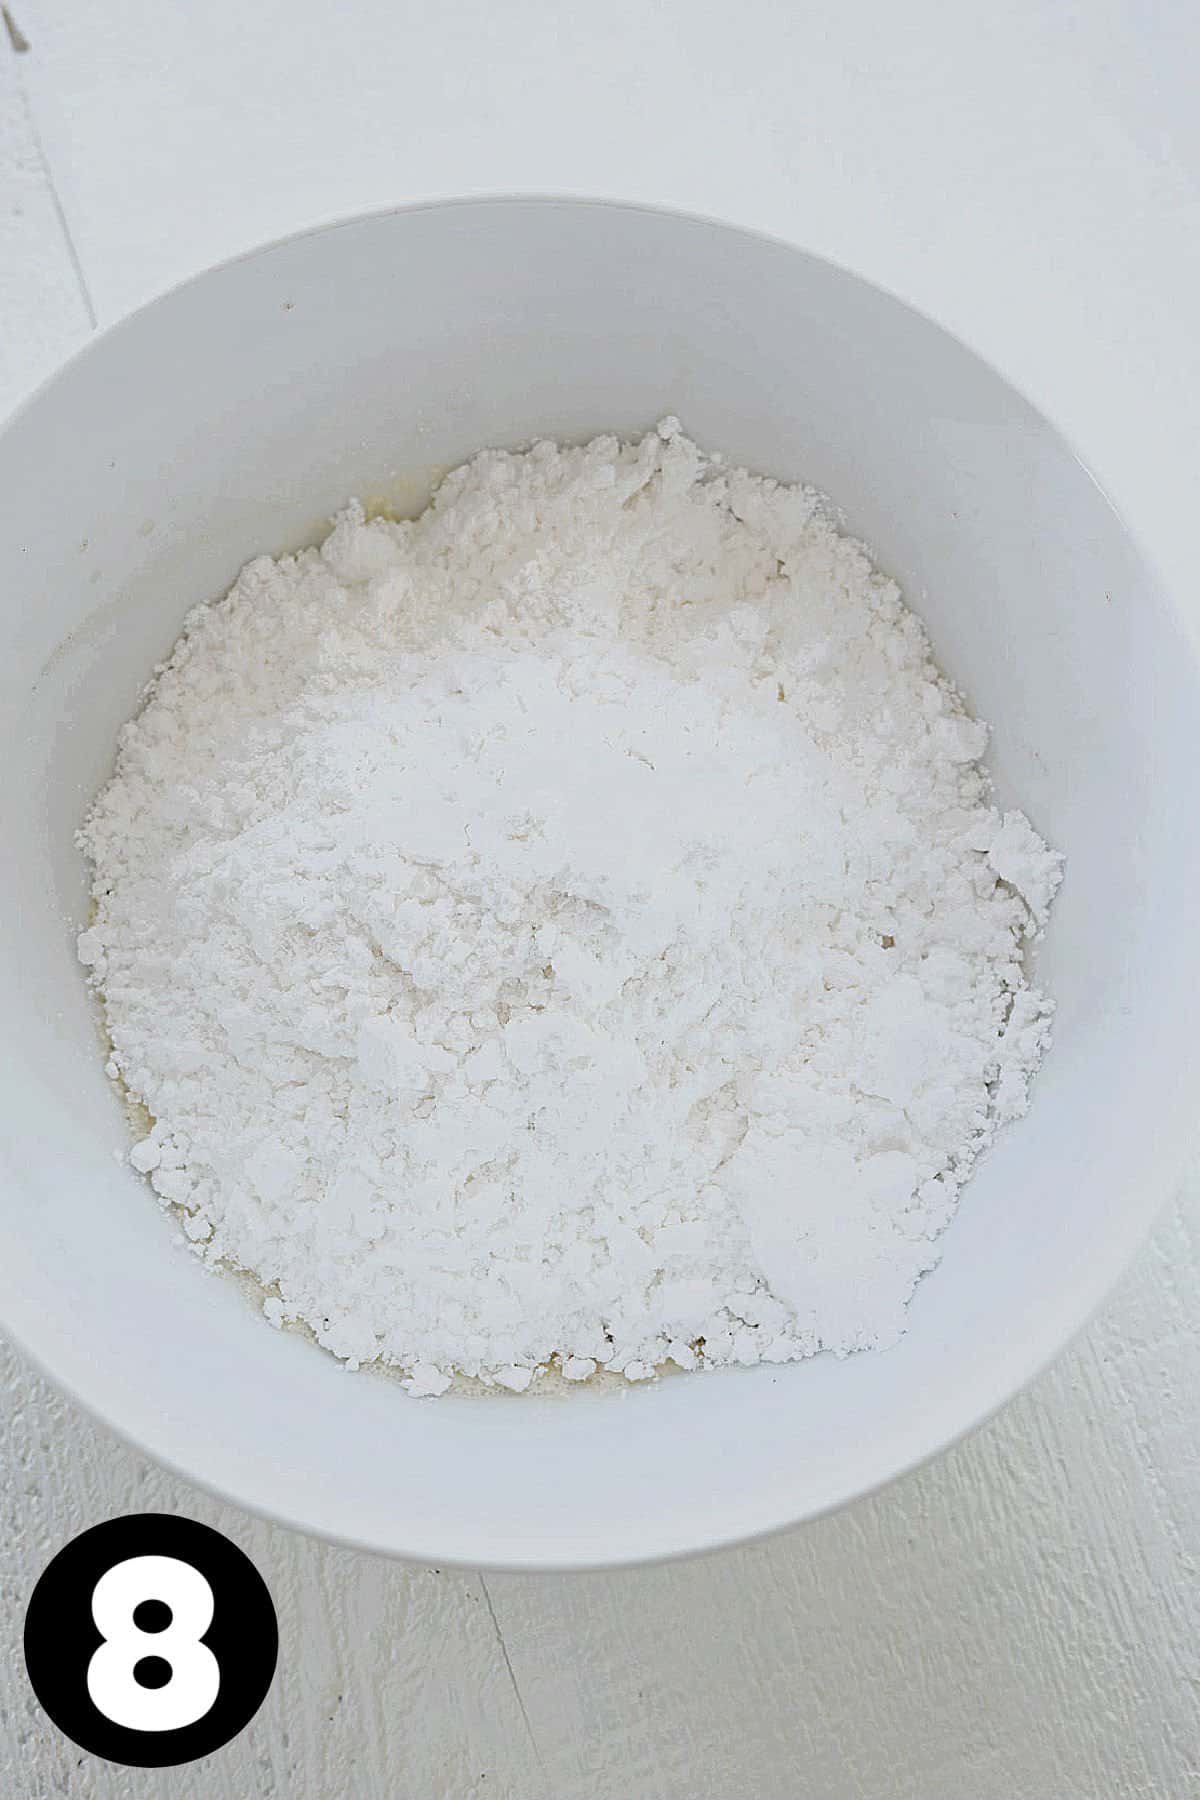 Powdered sugar in mixing bowl.